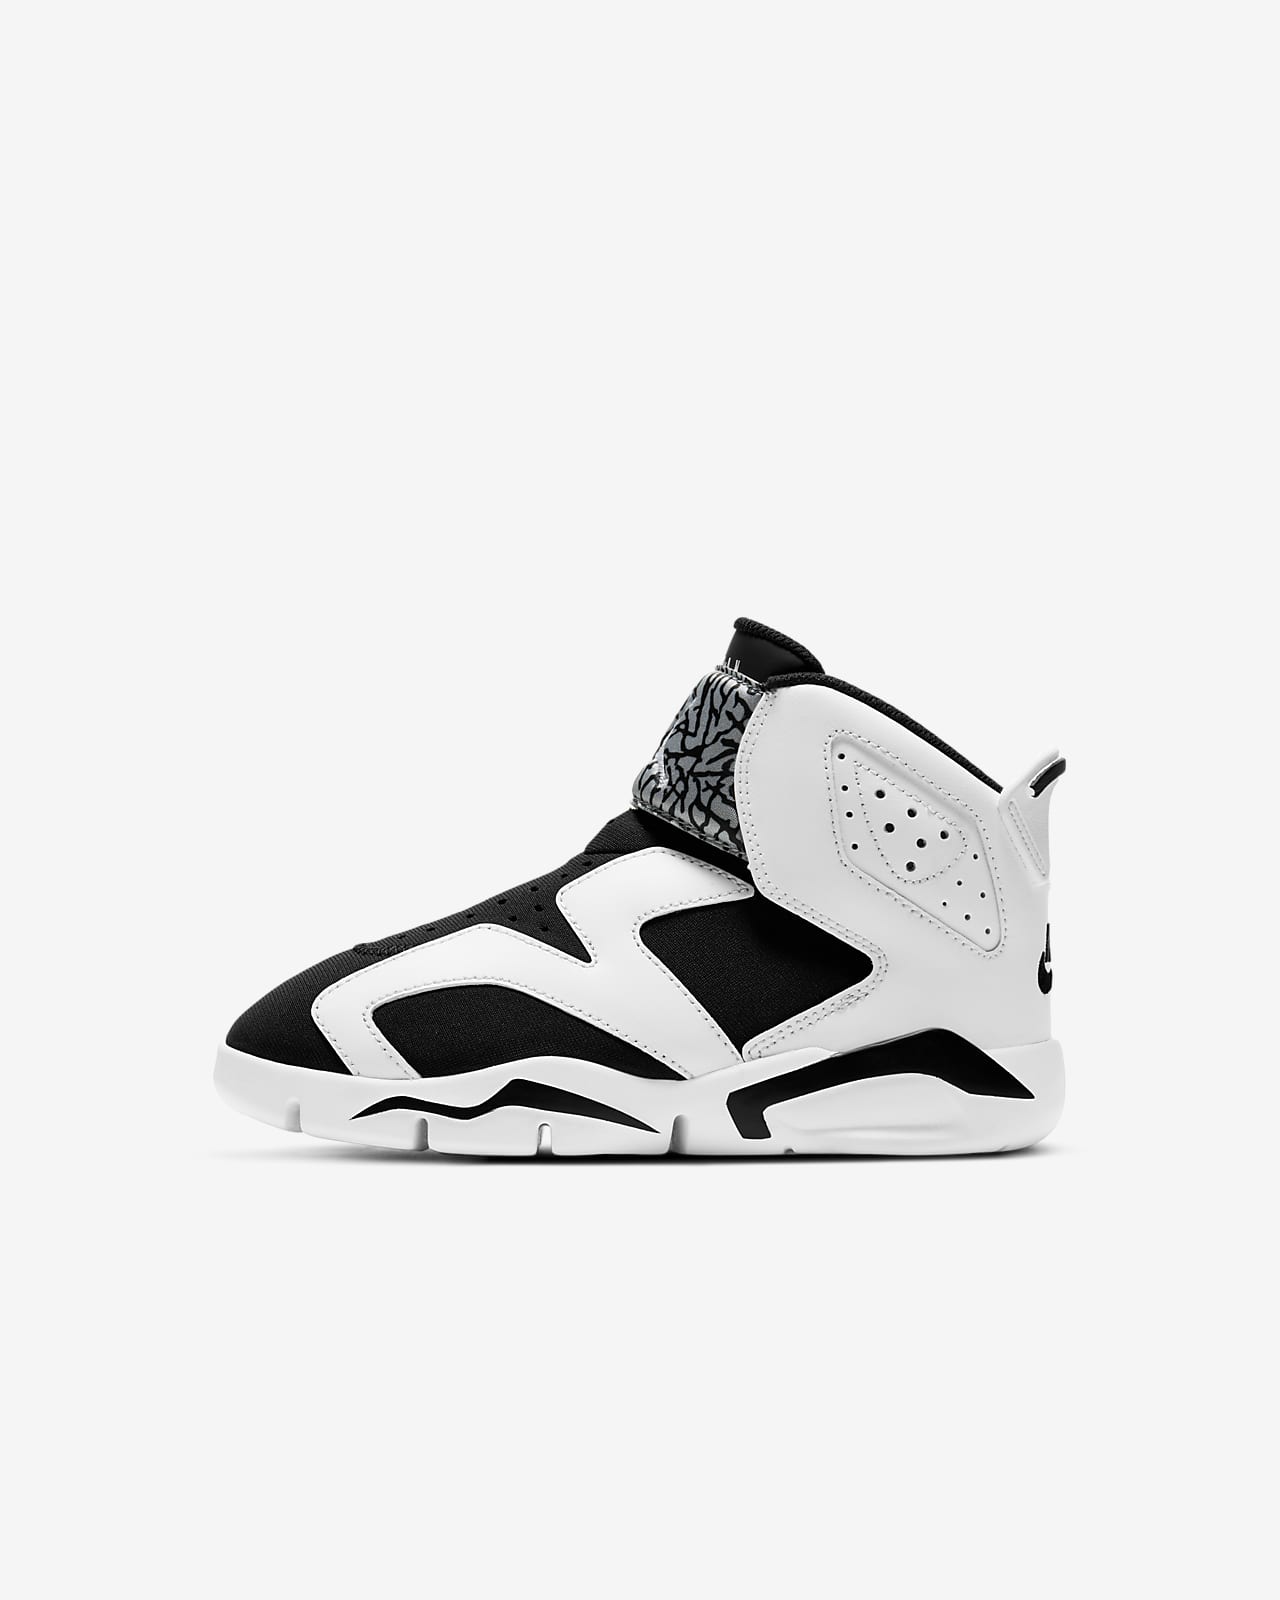 Jordan 6 Retro Little Flex 小童鞋款。Nike TW